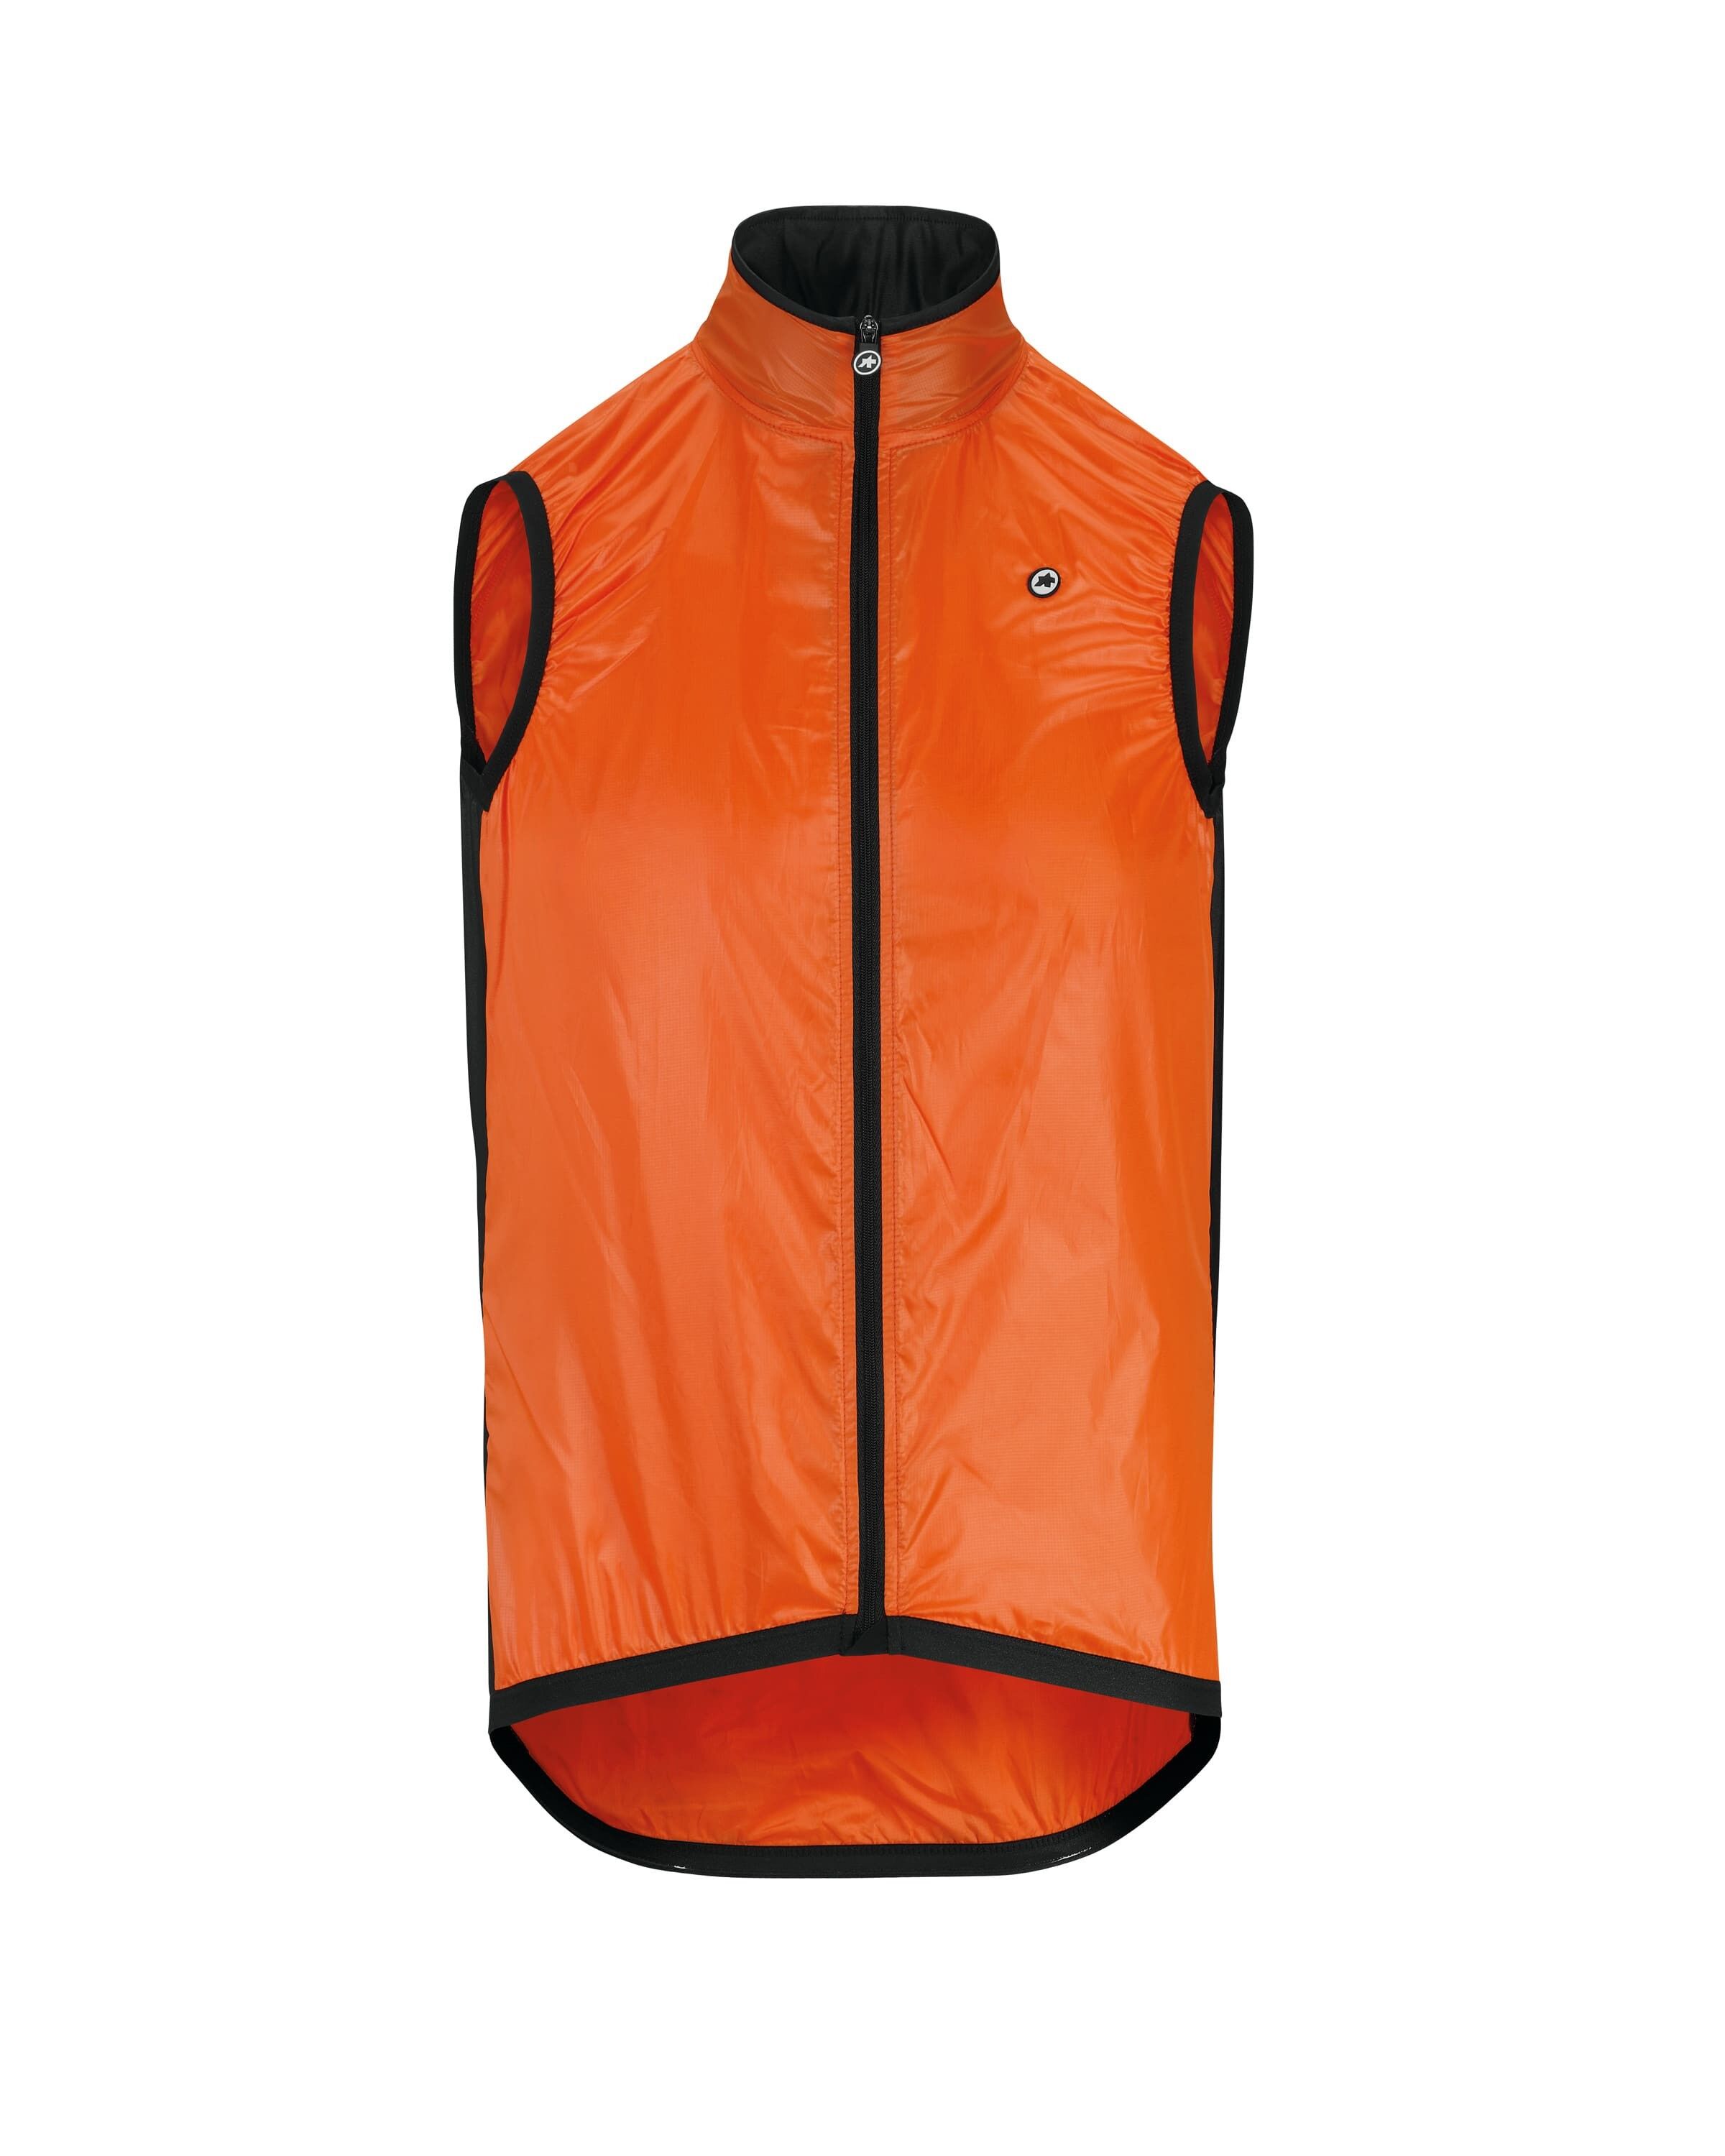 Assos Mille GT Wind Vest - Cycling windproof jacket - Men's